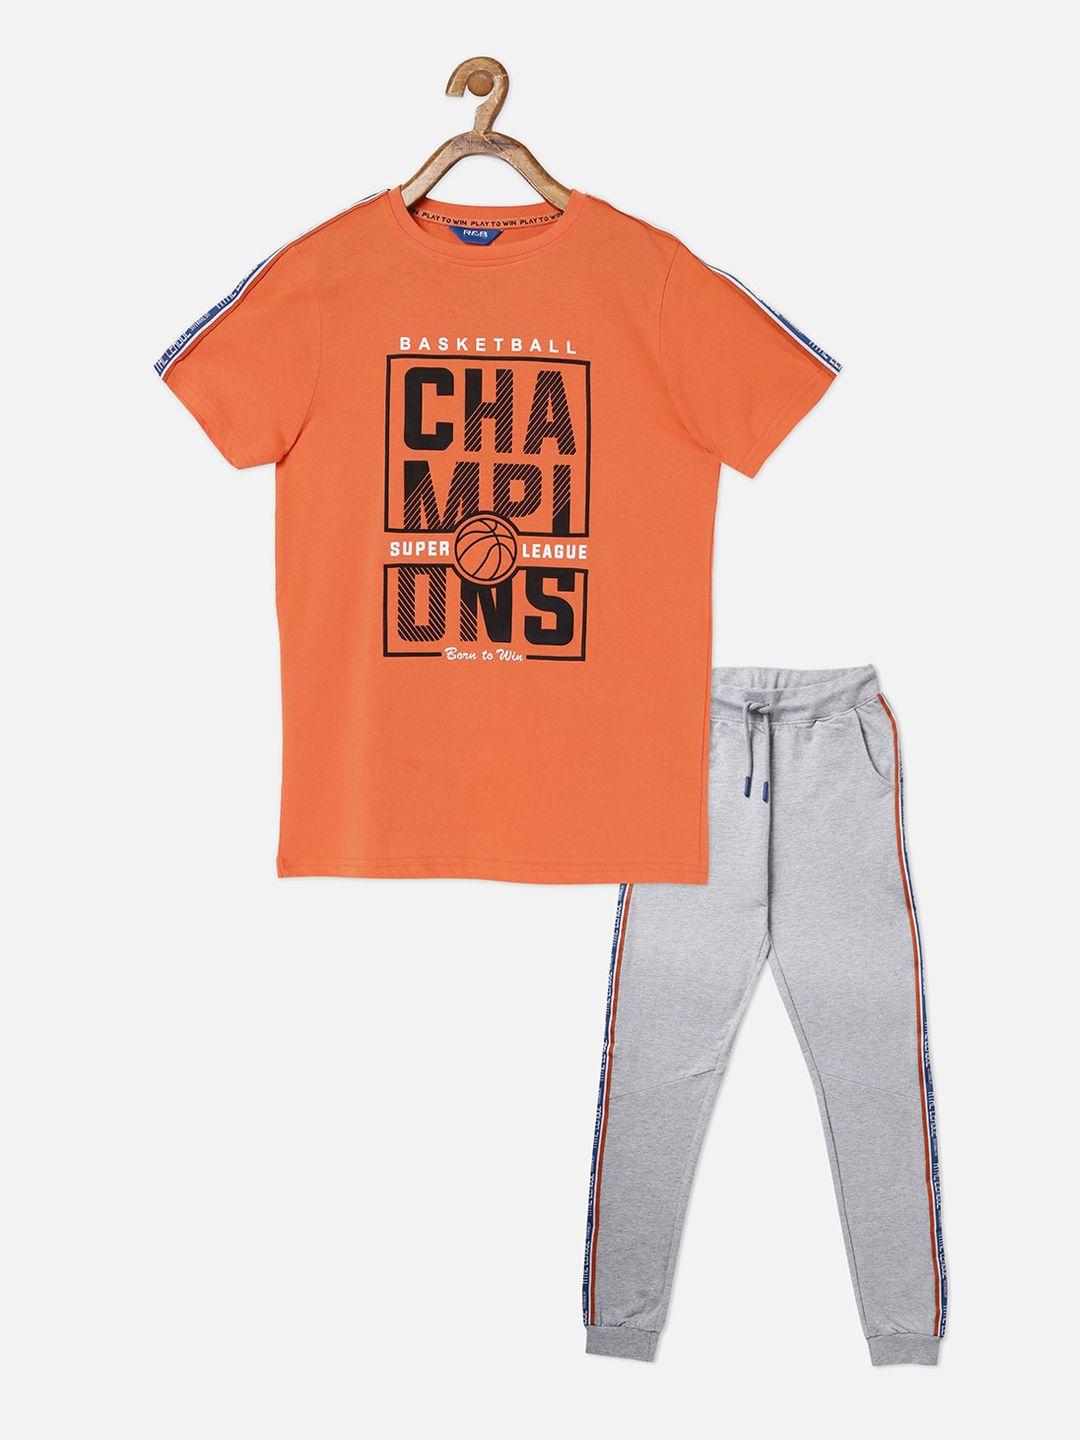 r&b boys orange & grey printed cotton blend clothing set